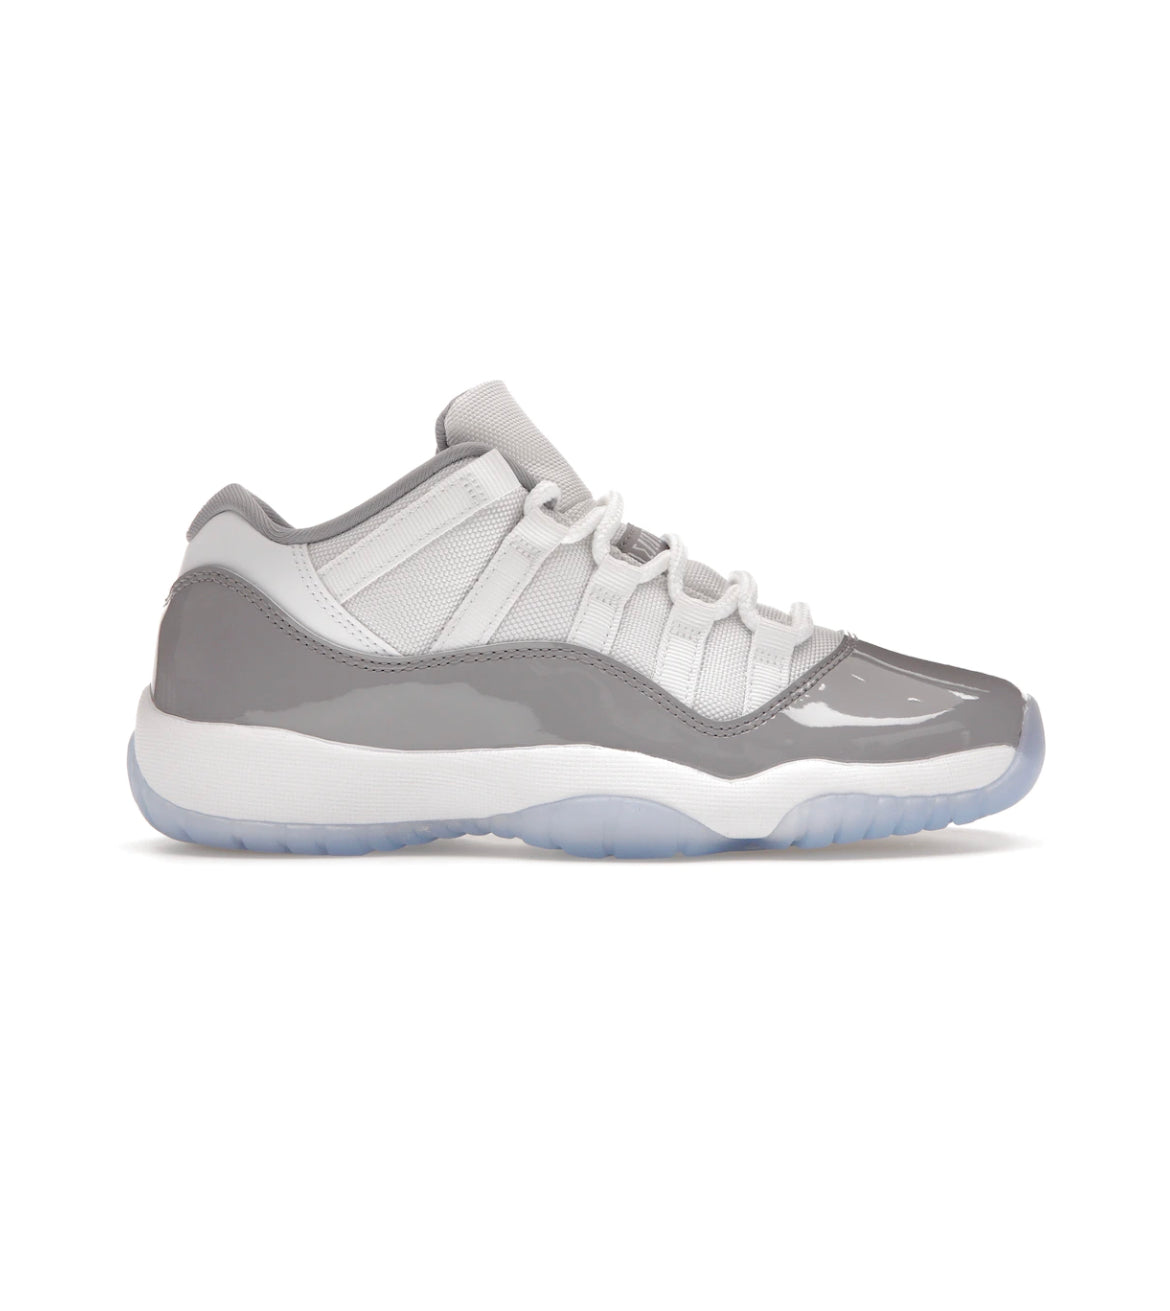 Jordan 11 Retro Low ‘Cement Grey’ (GS) 528896-140